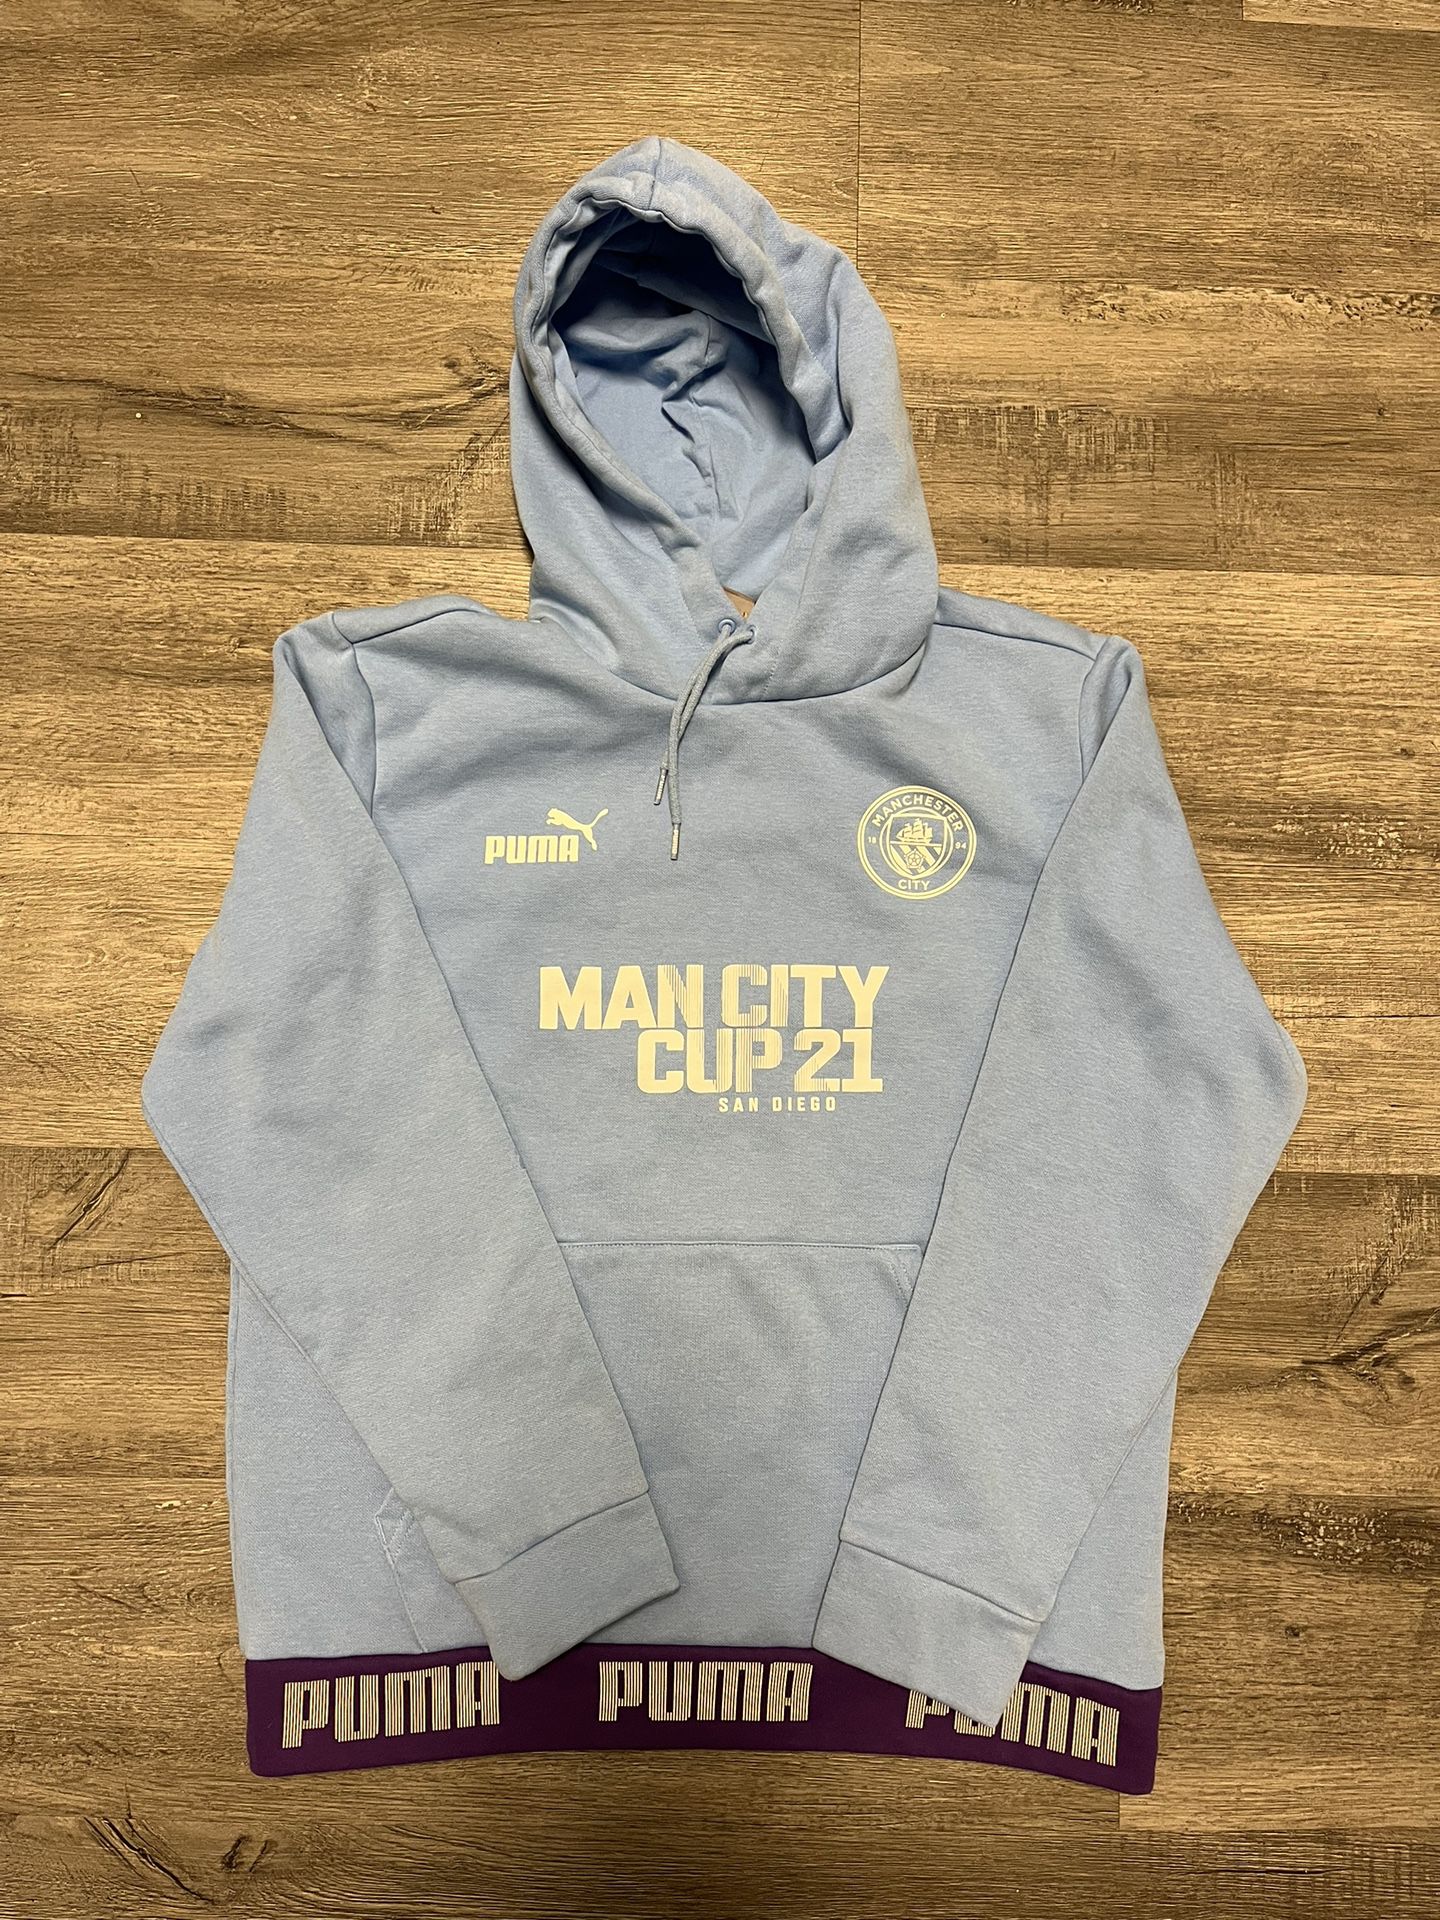 Puma Manchester City Hooded Sweatshirt Size Medium Pullover Mens Pullover Hoodie